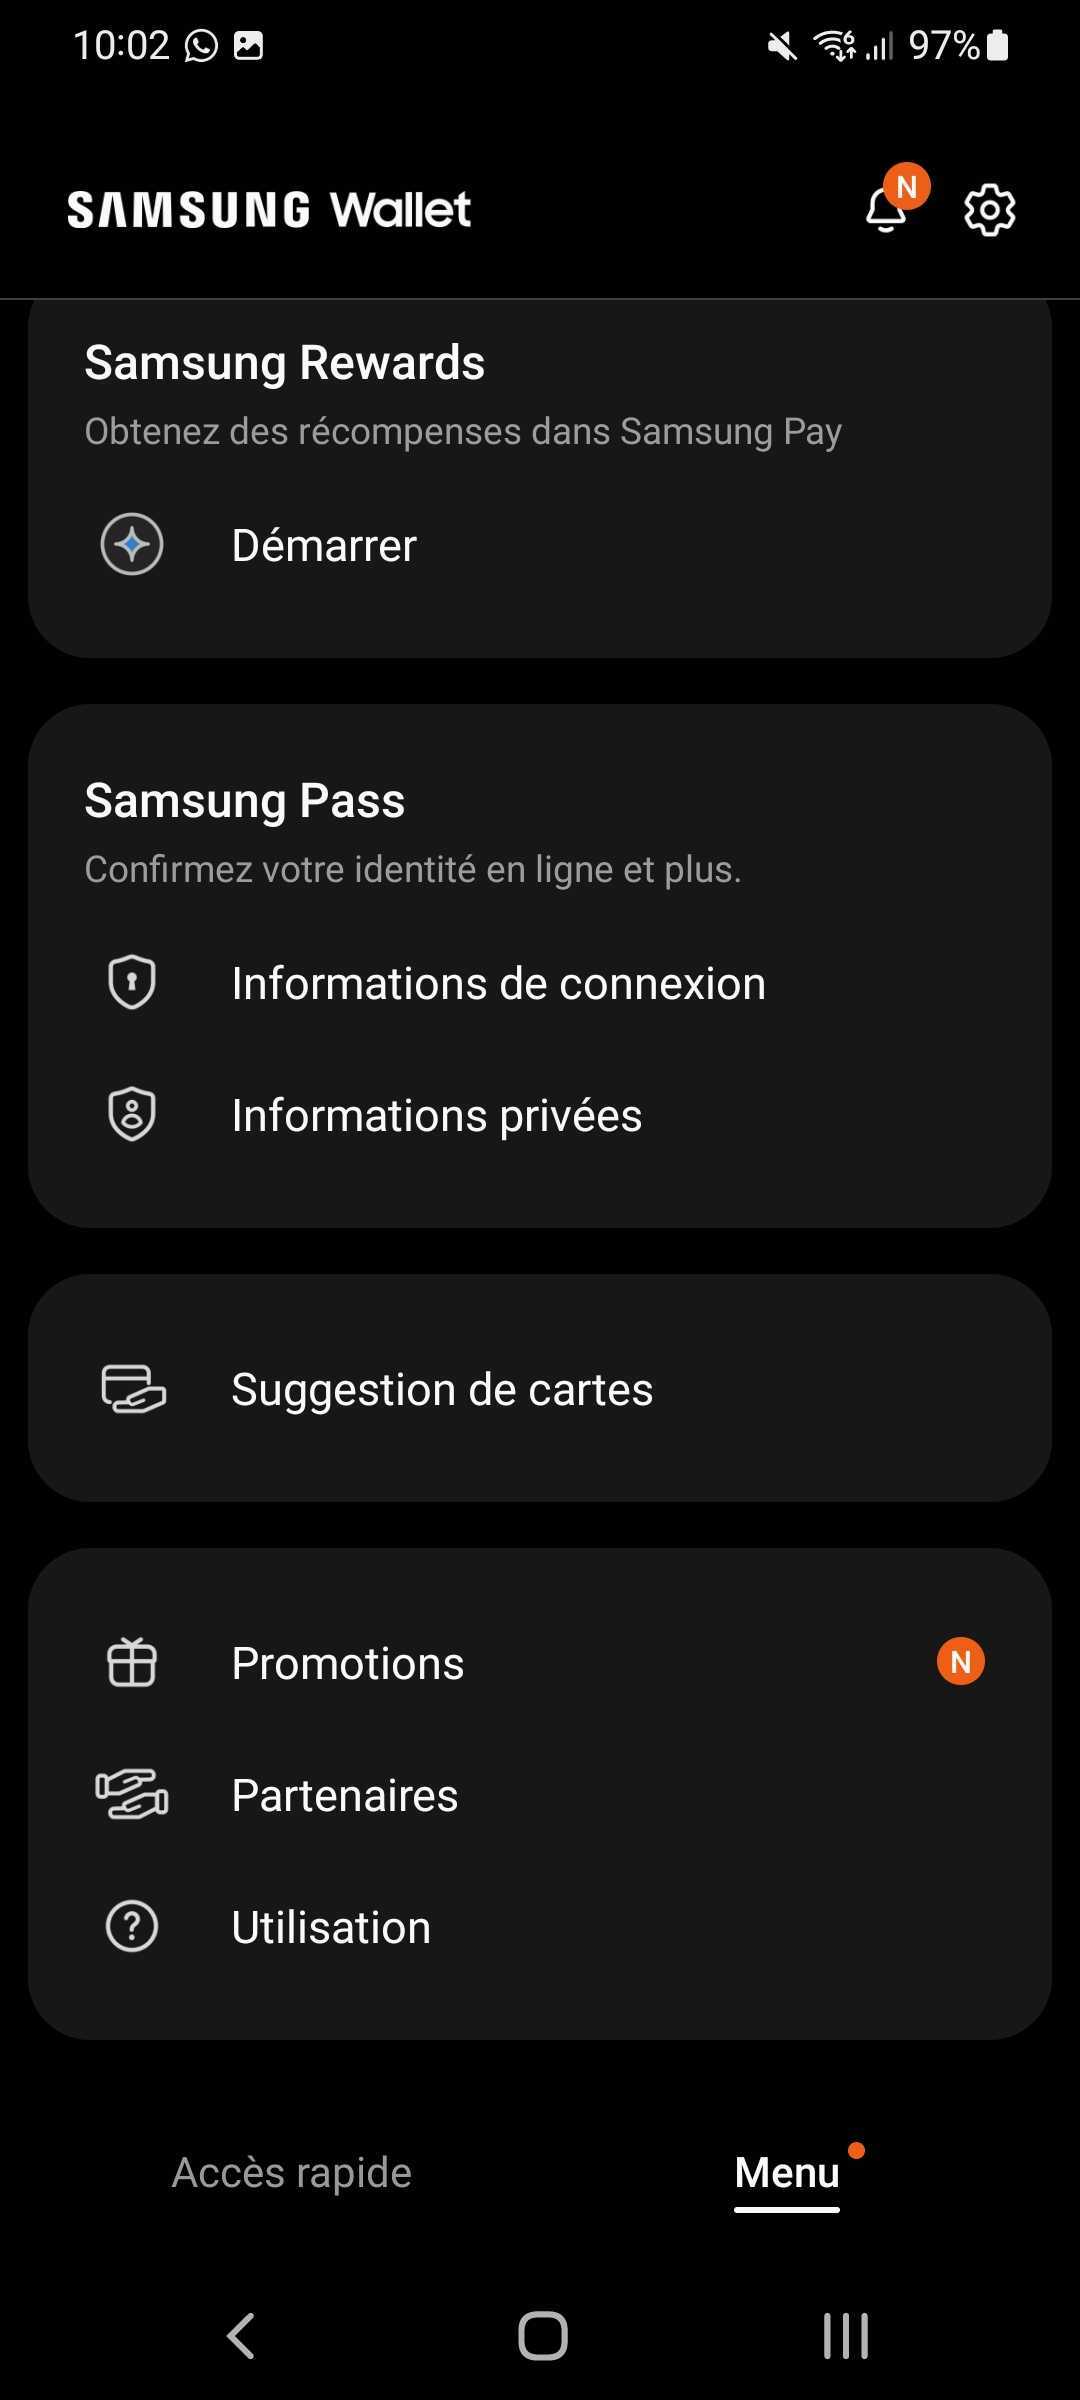 L'interface de Samsung Wallet